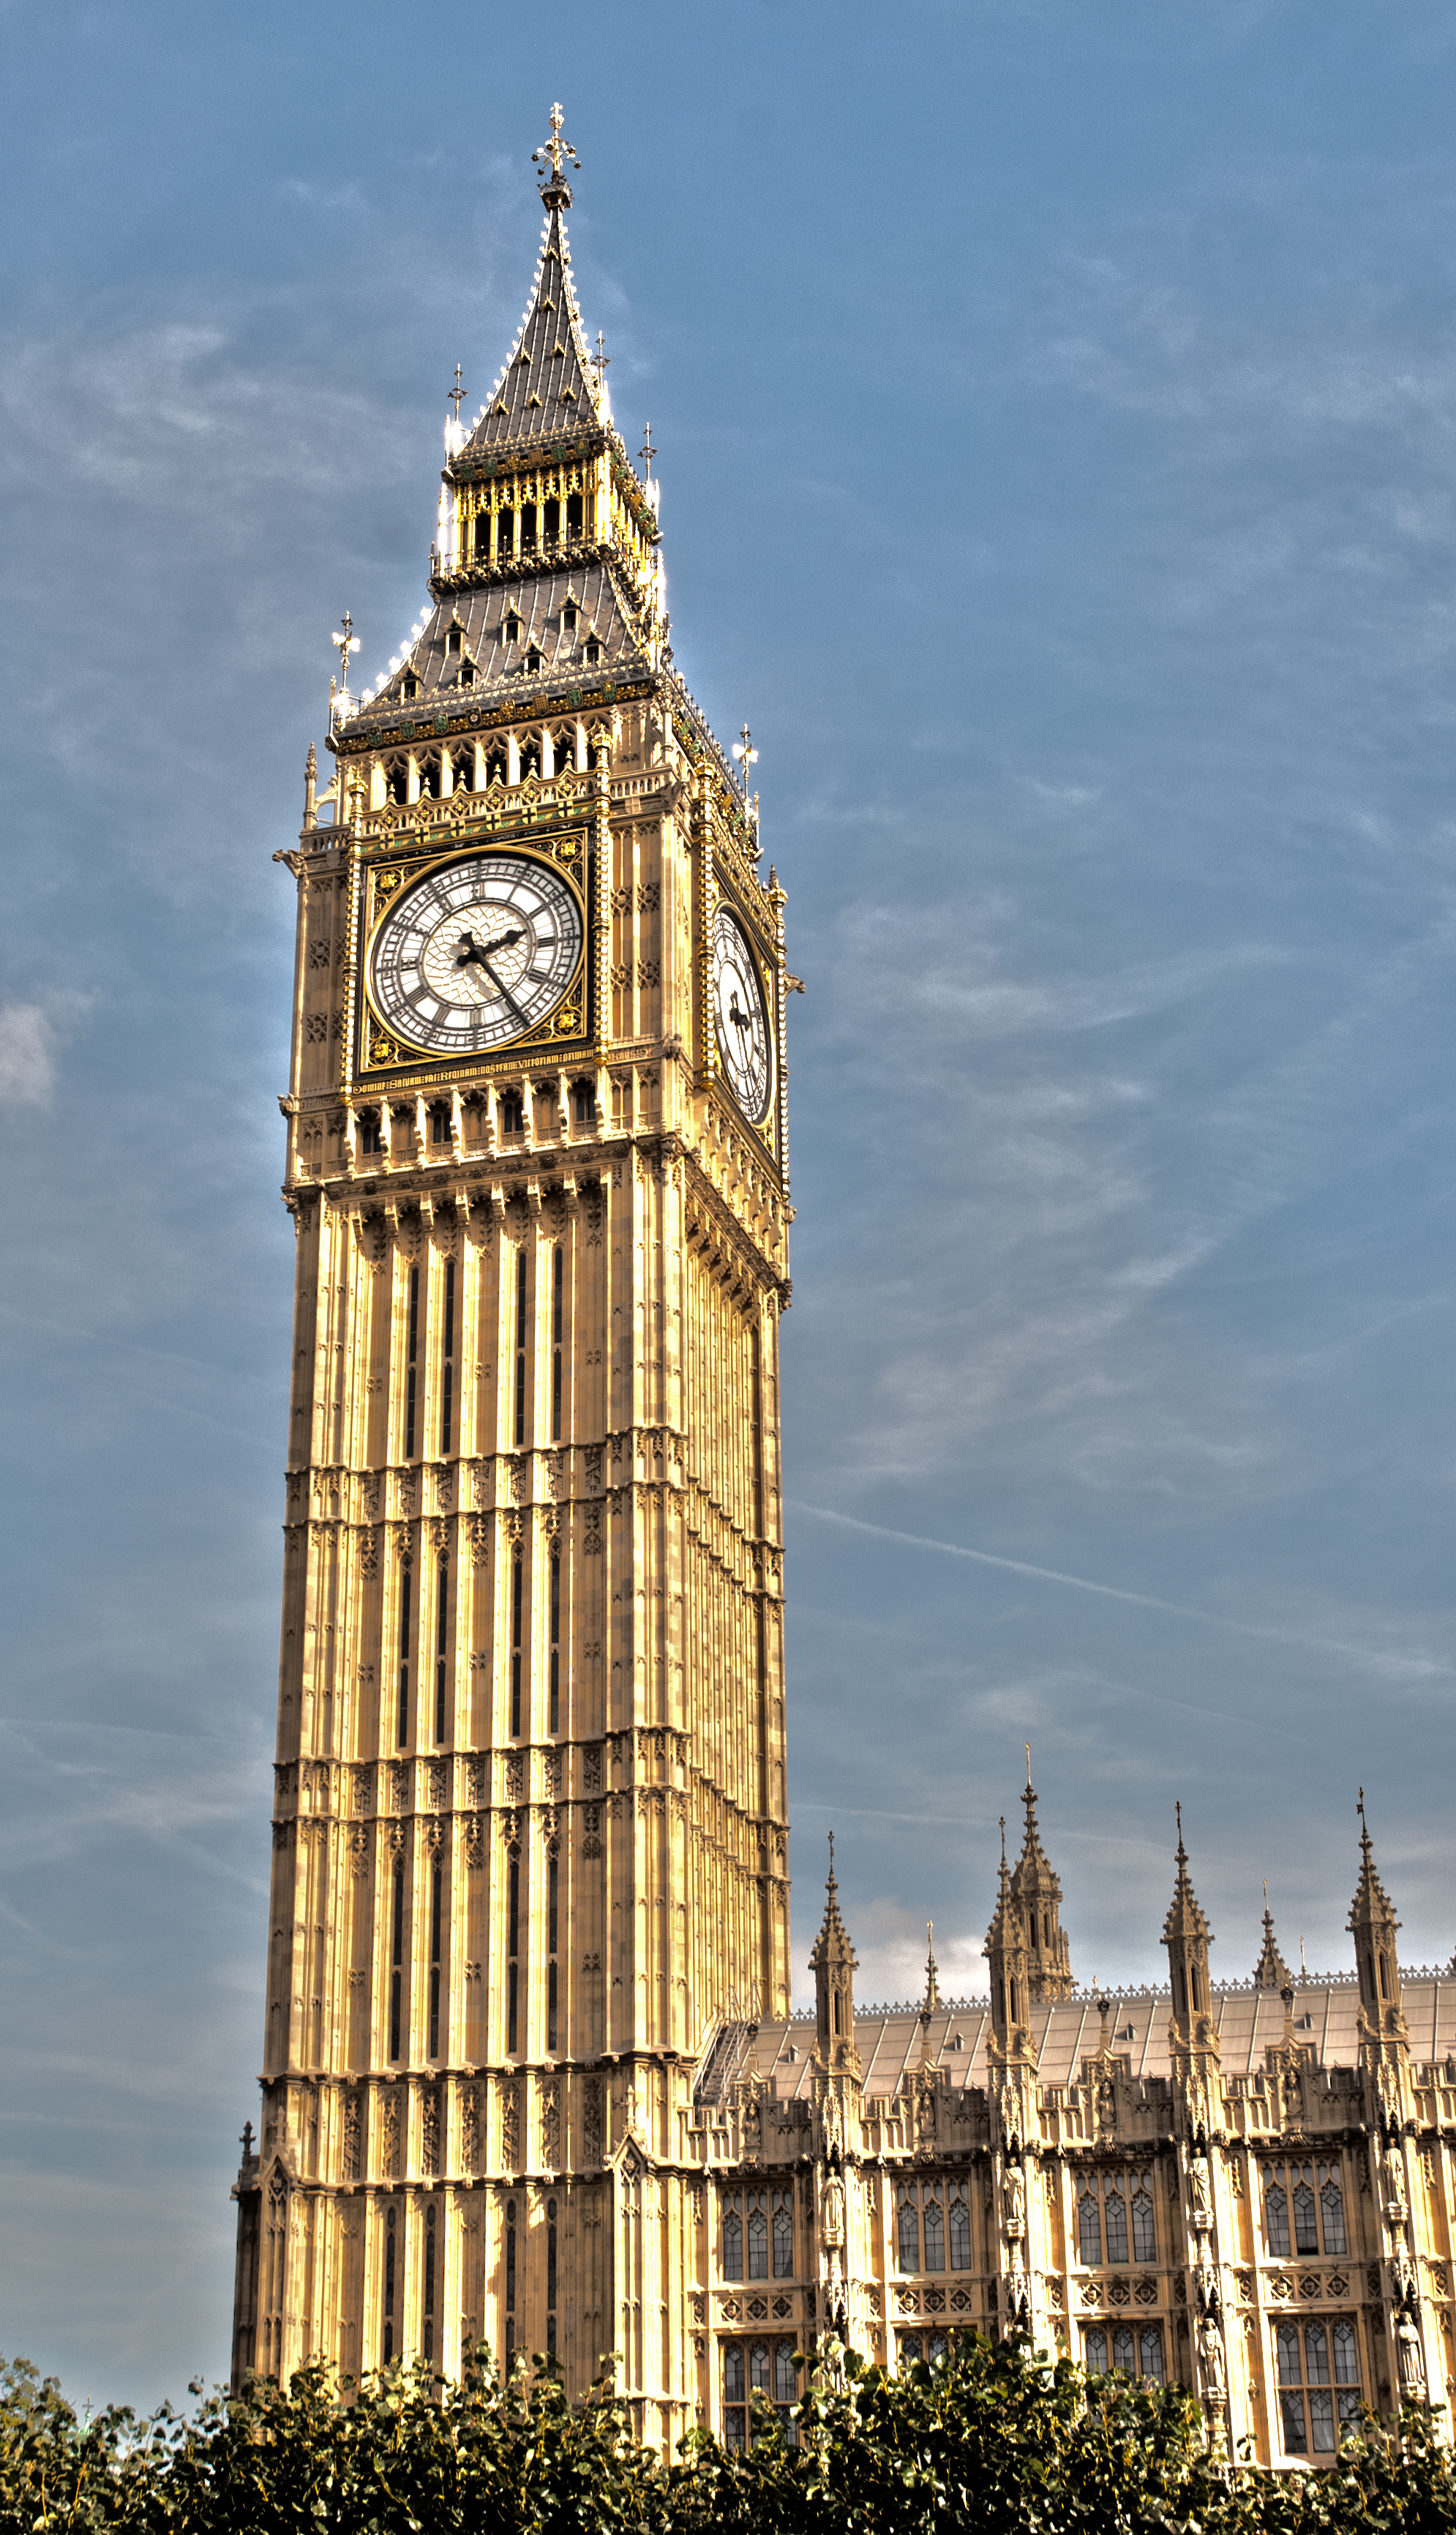 File:Big Ben, London (7601807122).jpg - Wikimedia Commons